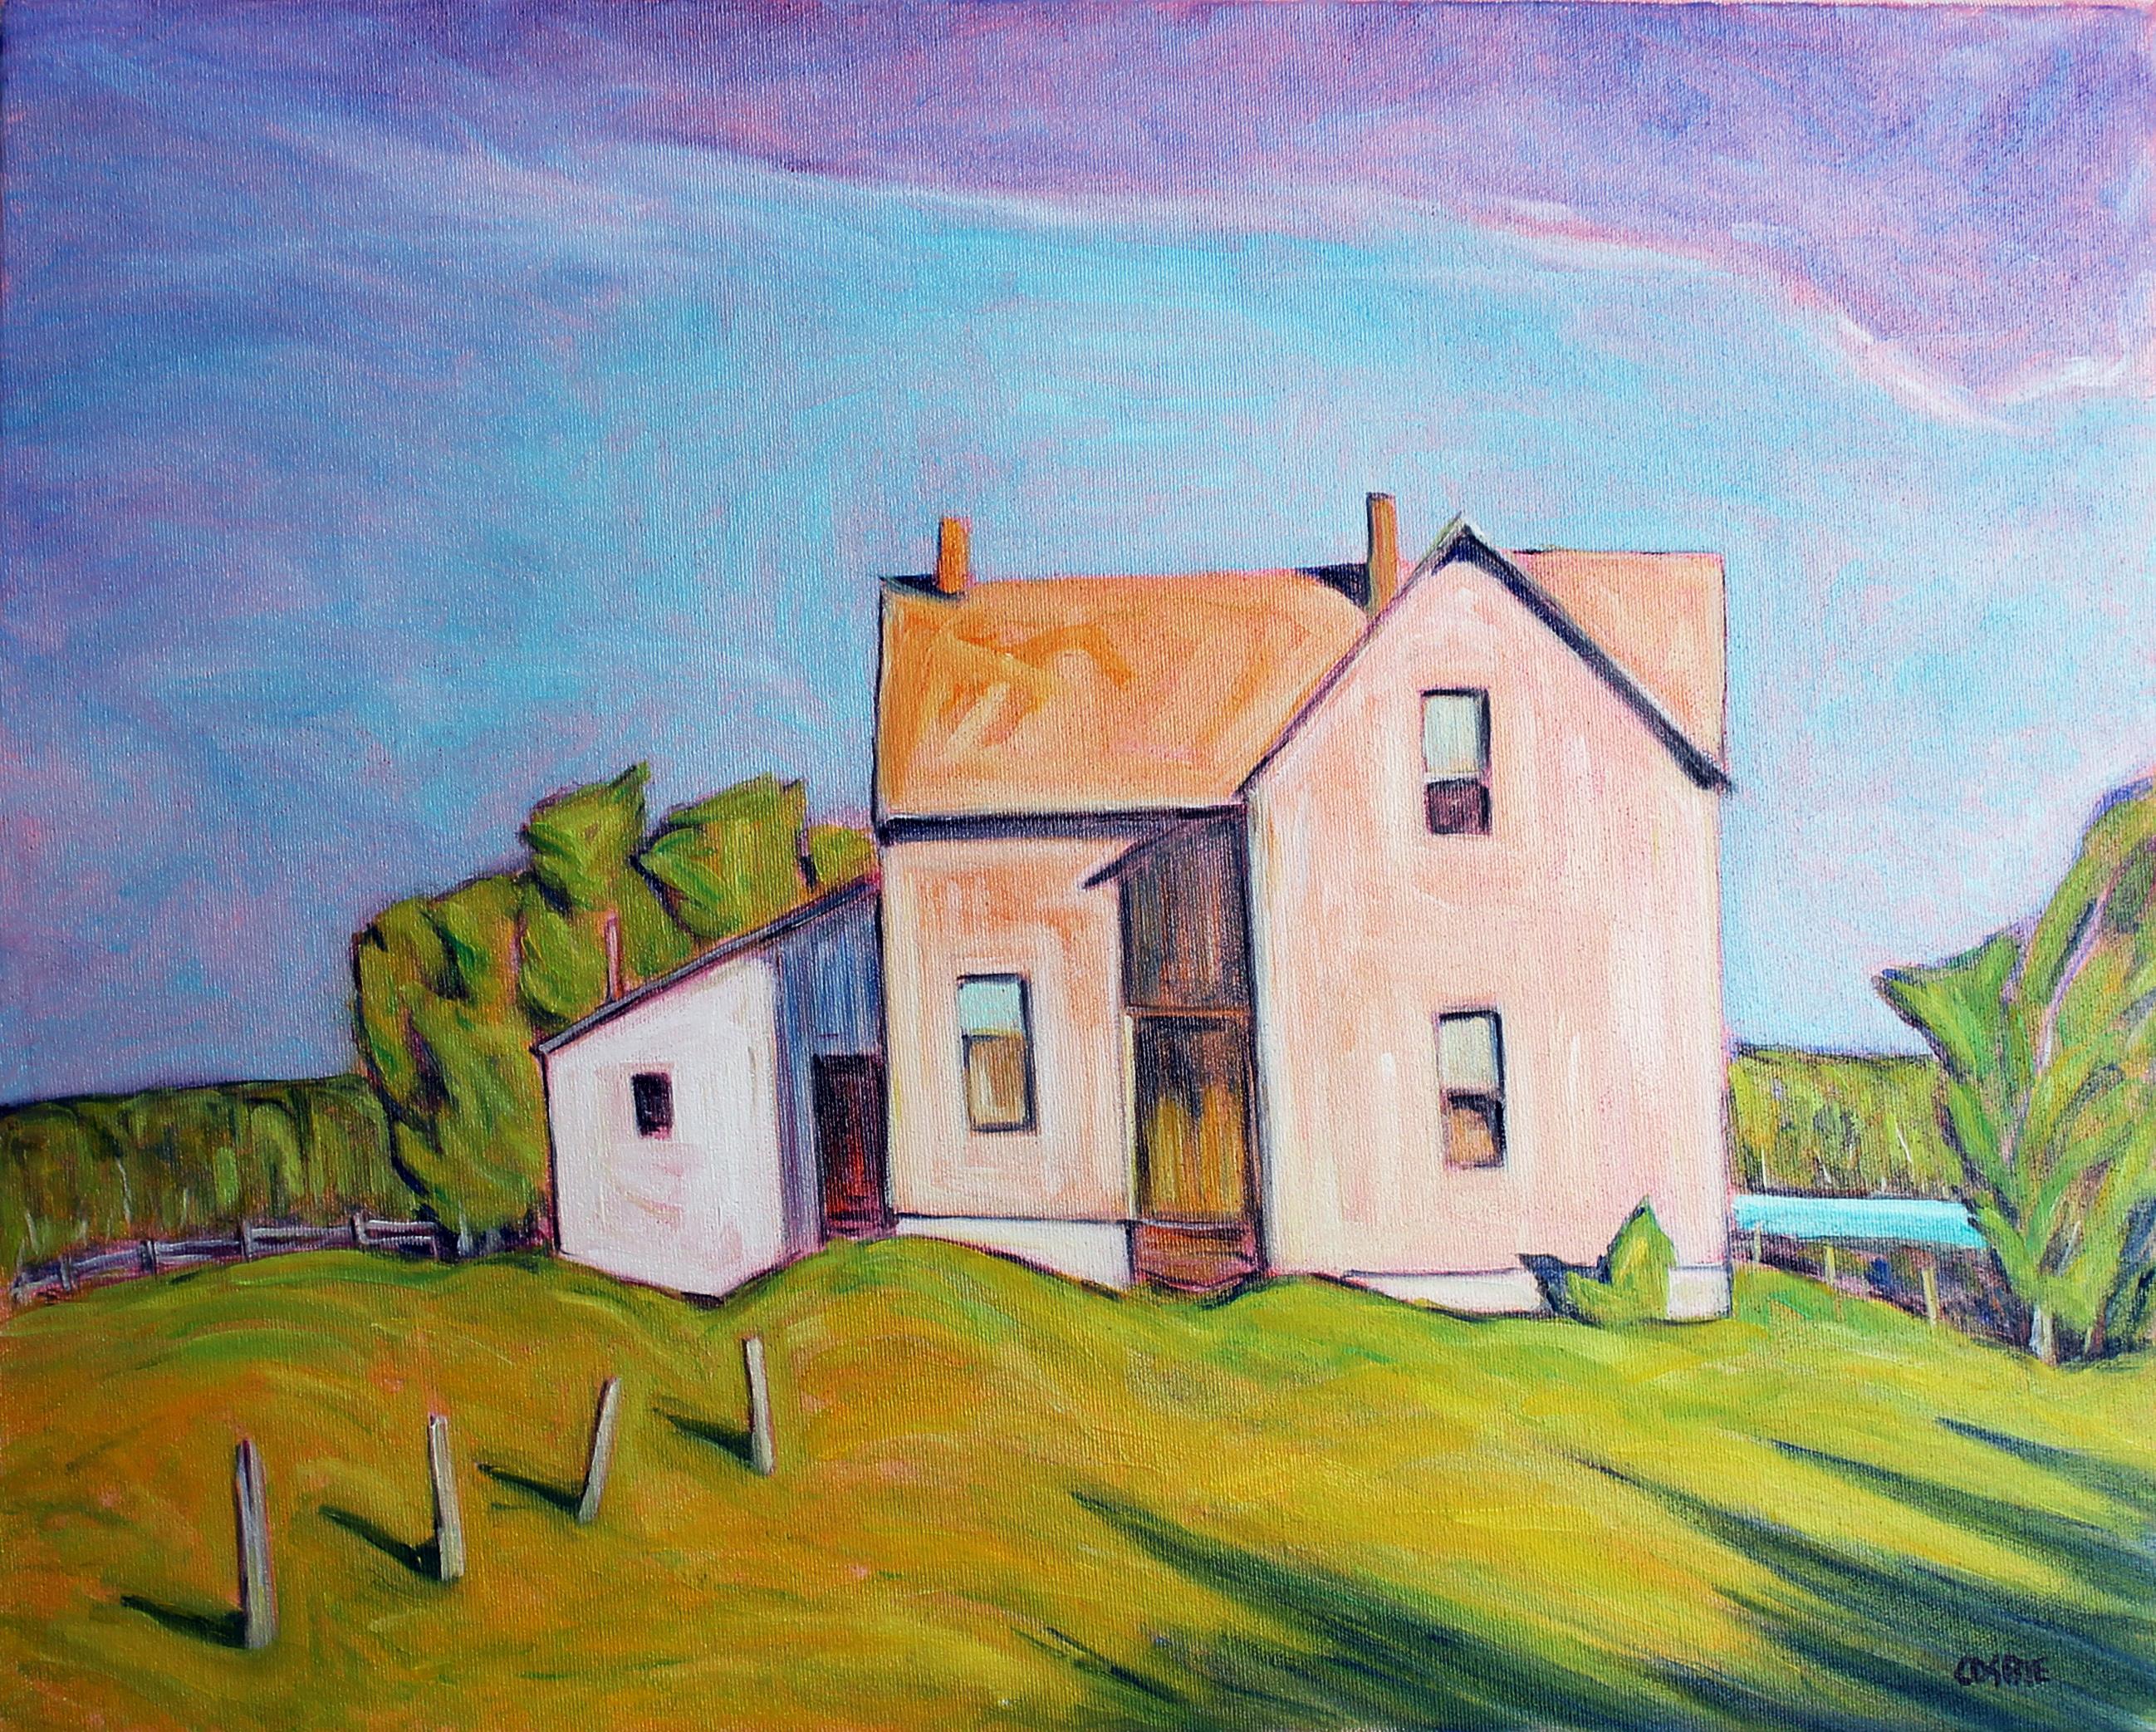 Ottawa Valley Farm, Oil Painting - Art by Doug Cosbie